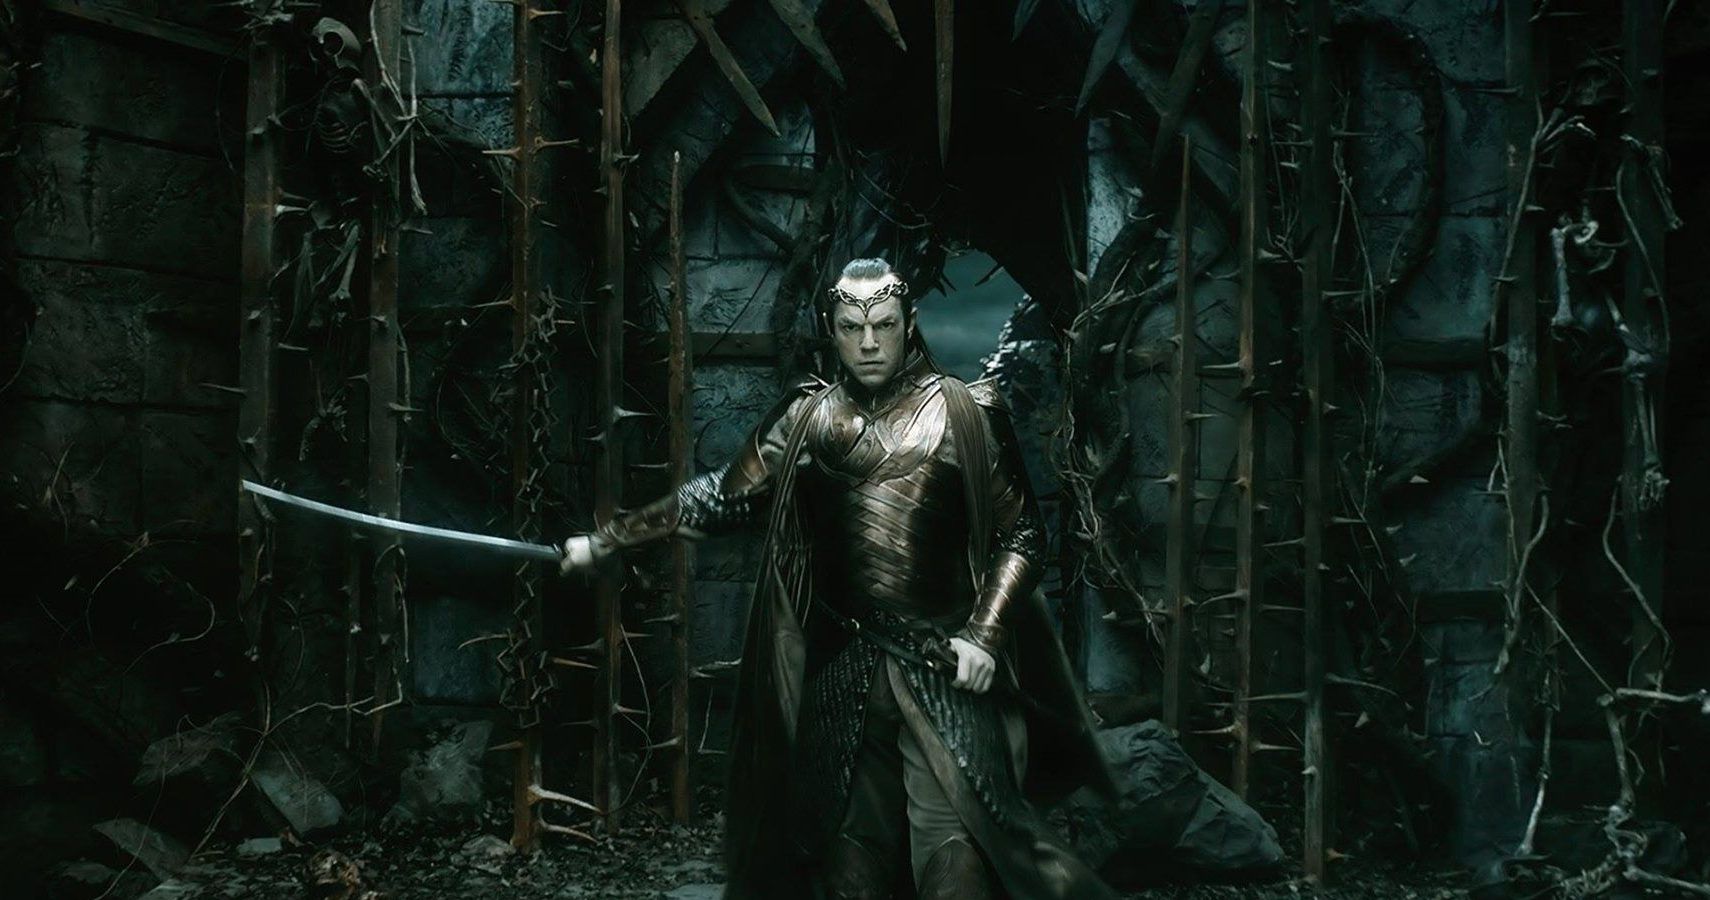 Elrond weilding a sword in The Hobbit movies 